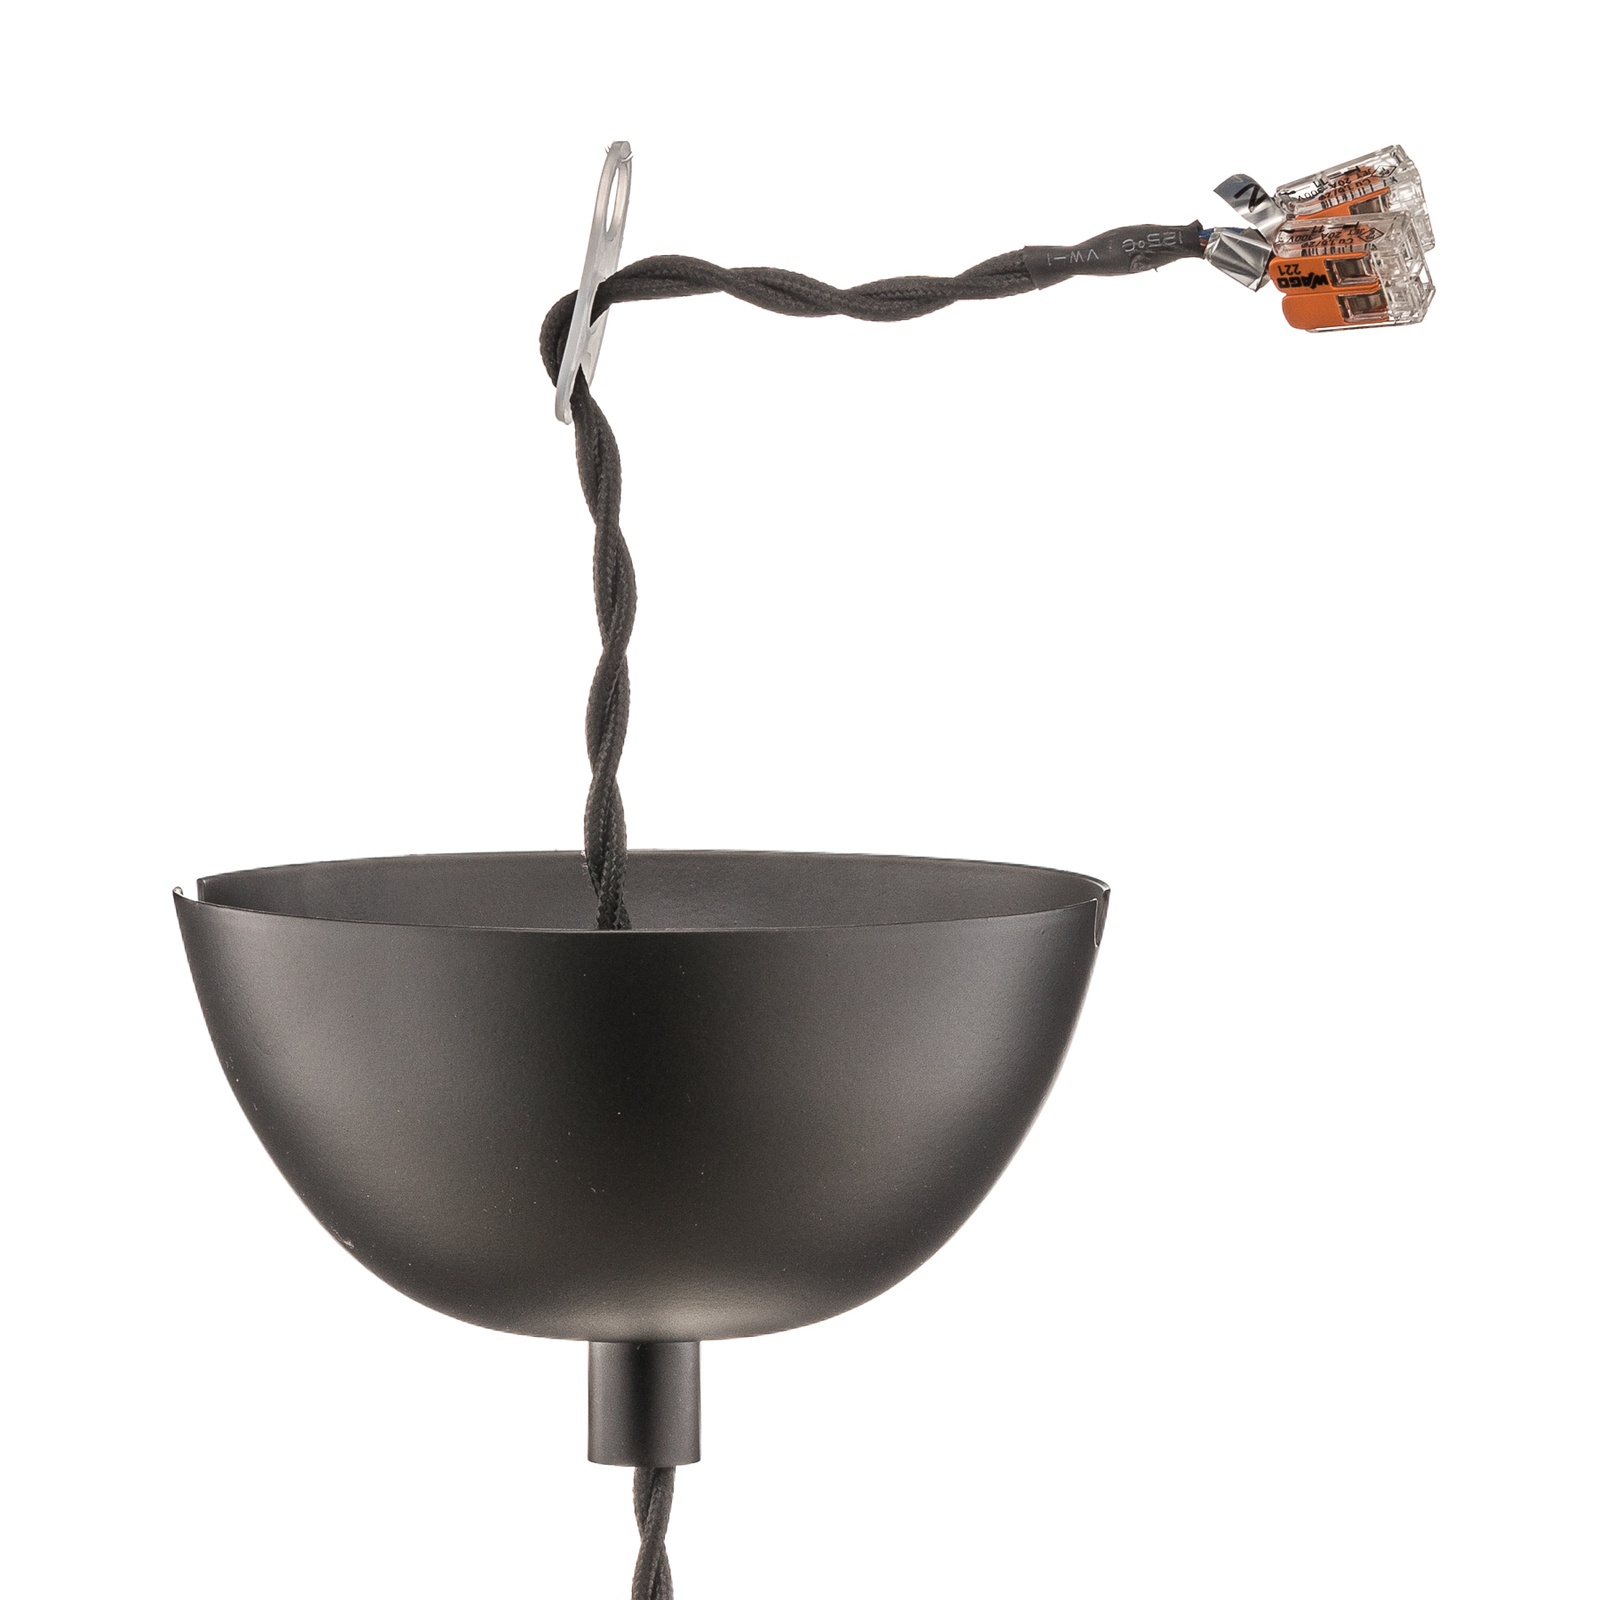 Northern Unika - design-hanglamp, 10,5 cm